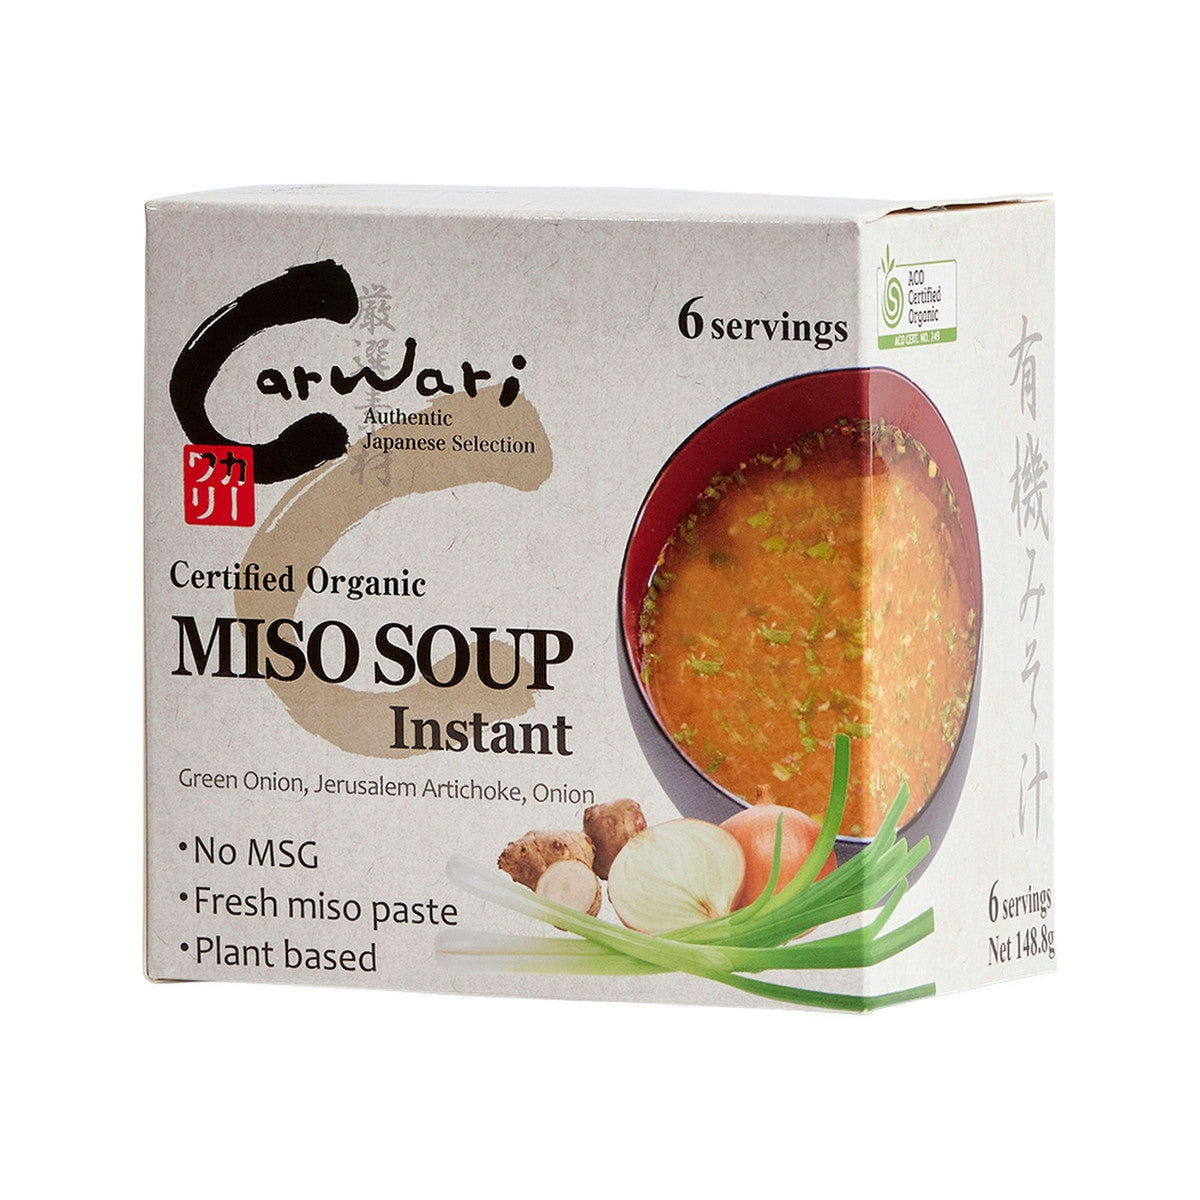 image of Carwari Organic Miso Soup Instant x 6 Serves (148.8g net) on white background